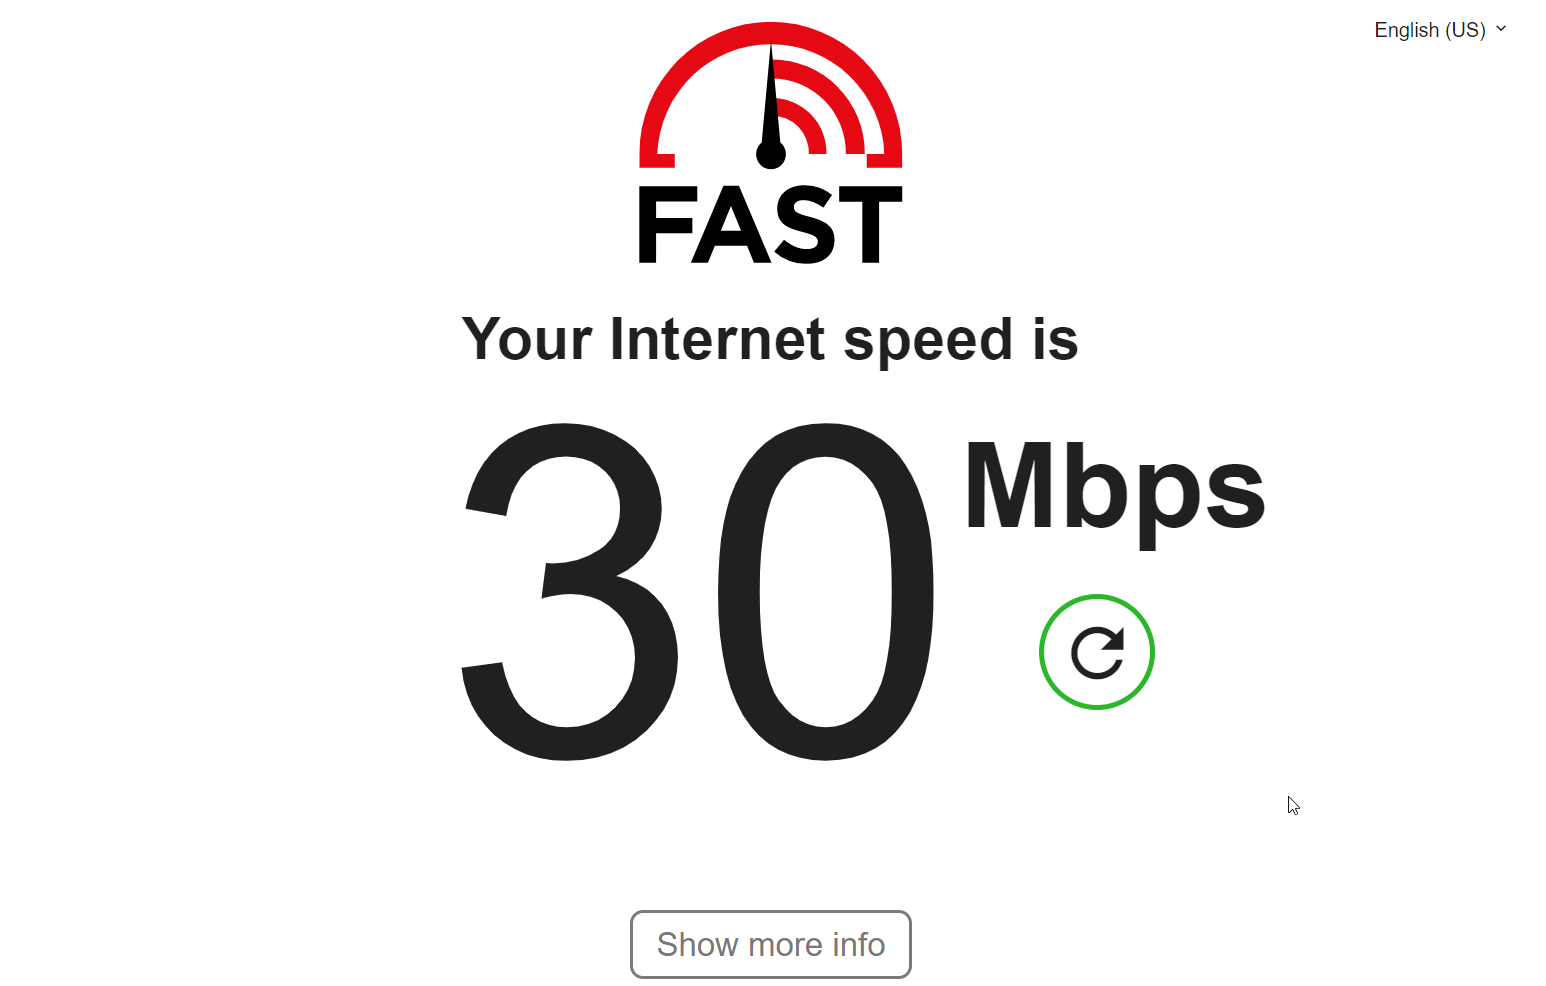 test my optimum internet speed